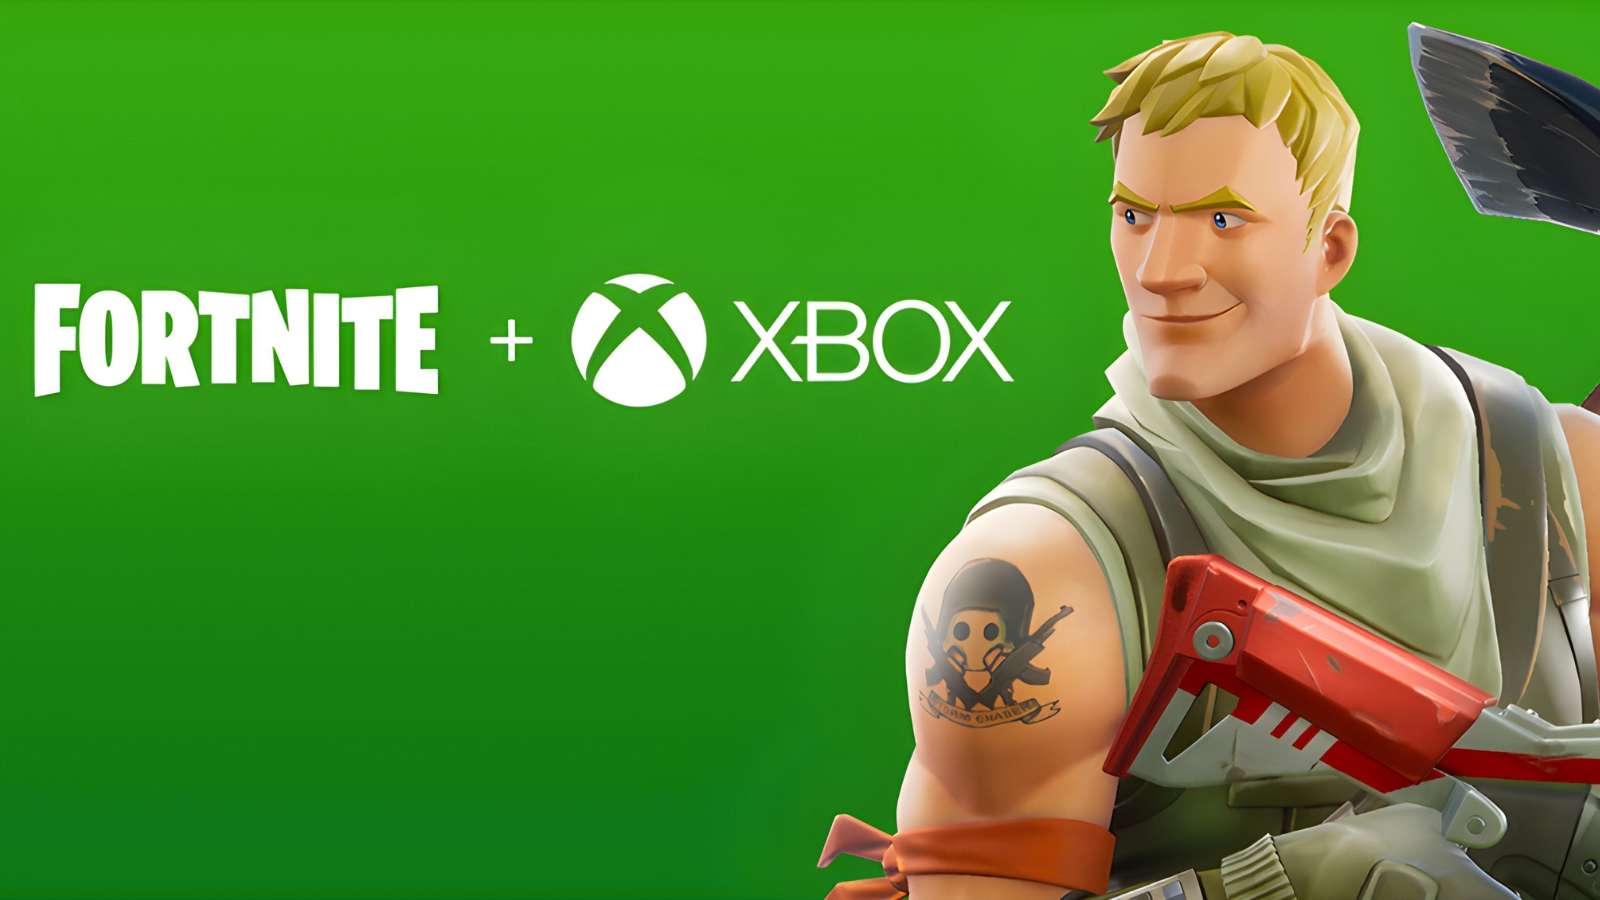 Fortnite and Xbox logos with Jonesy